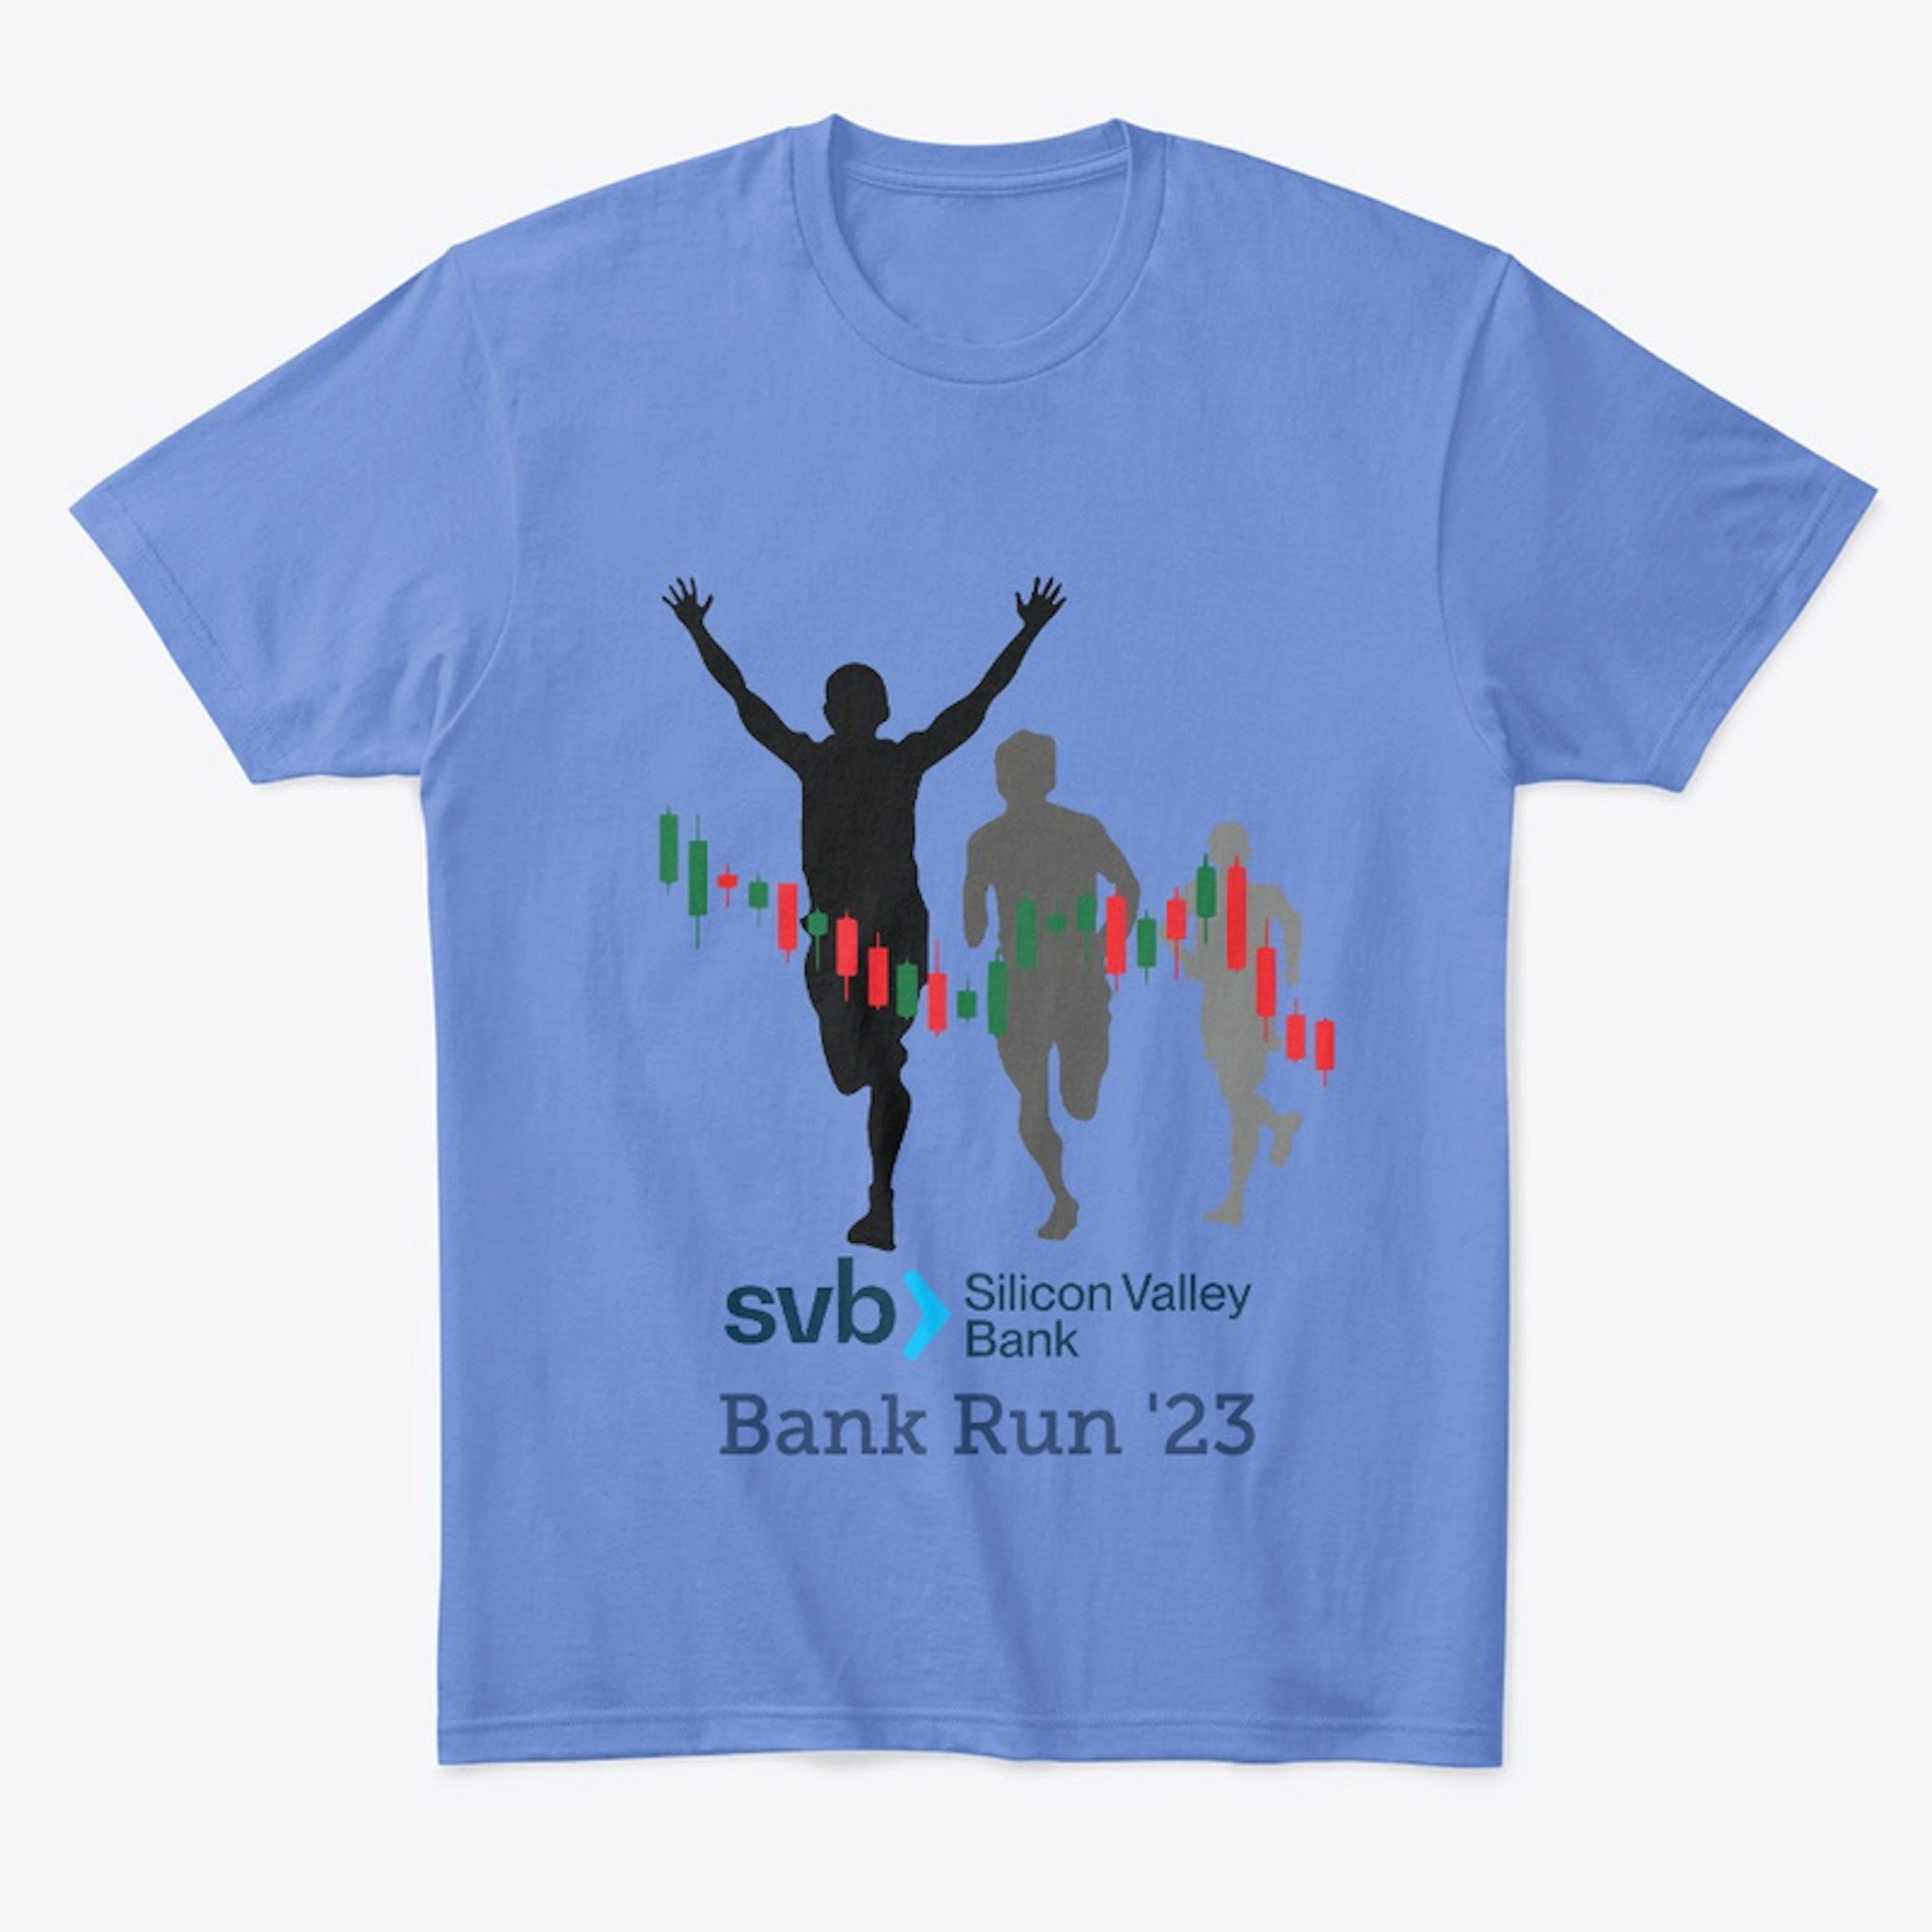 SVB Bank Run Commemorative Shirts